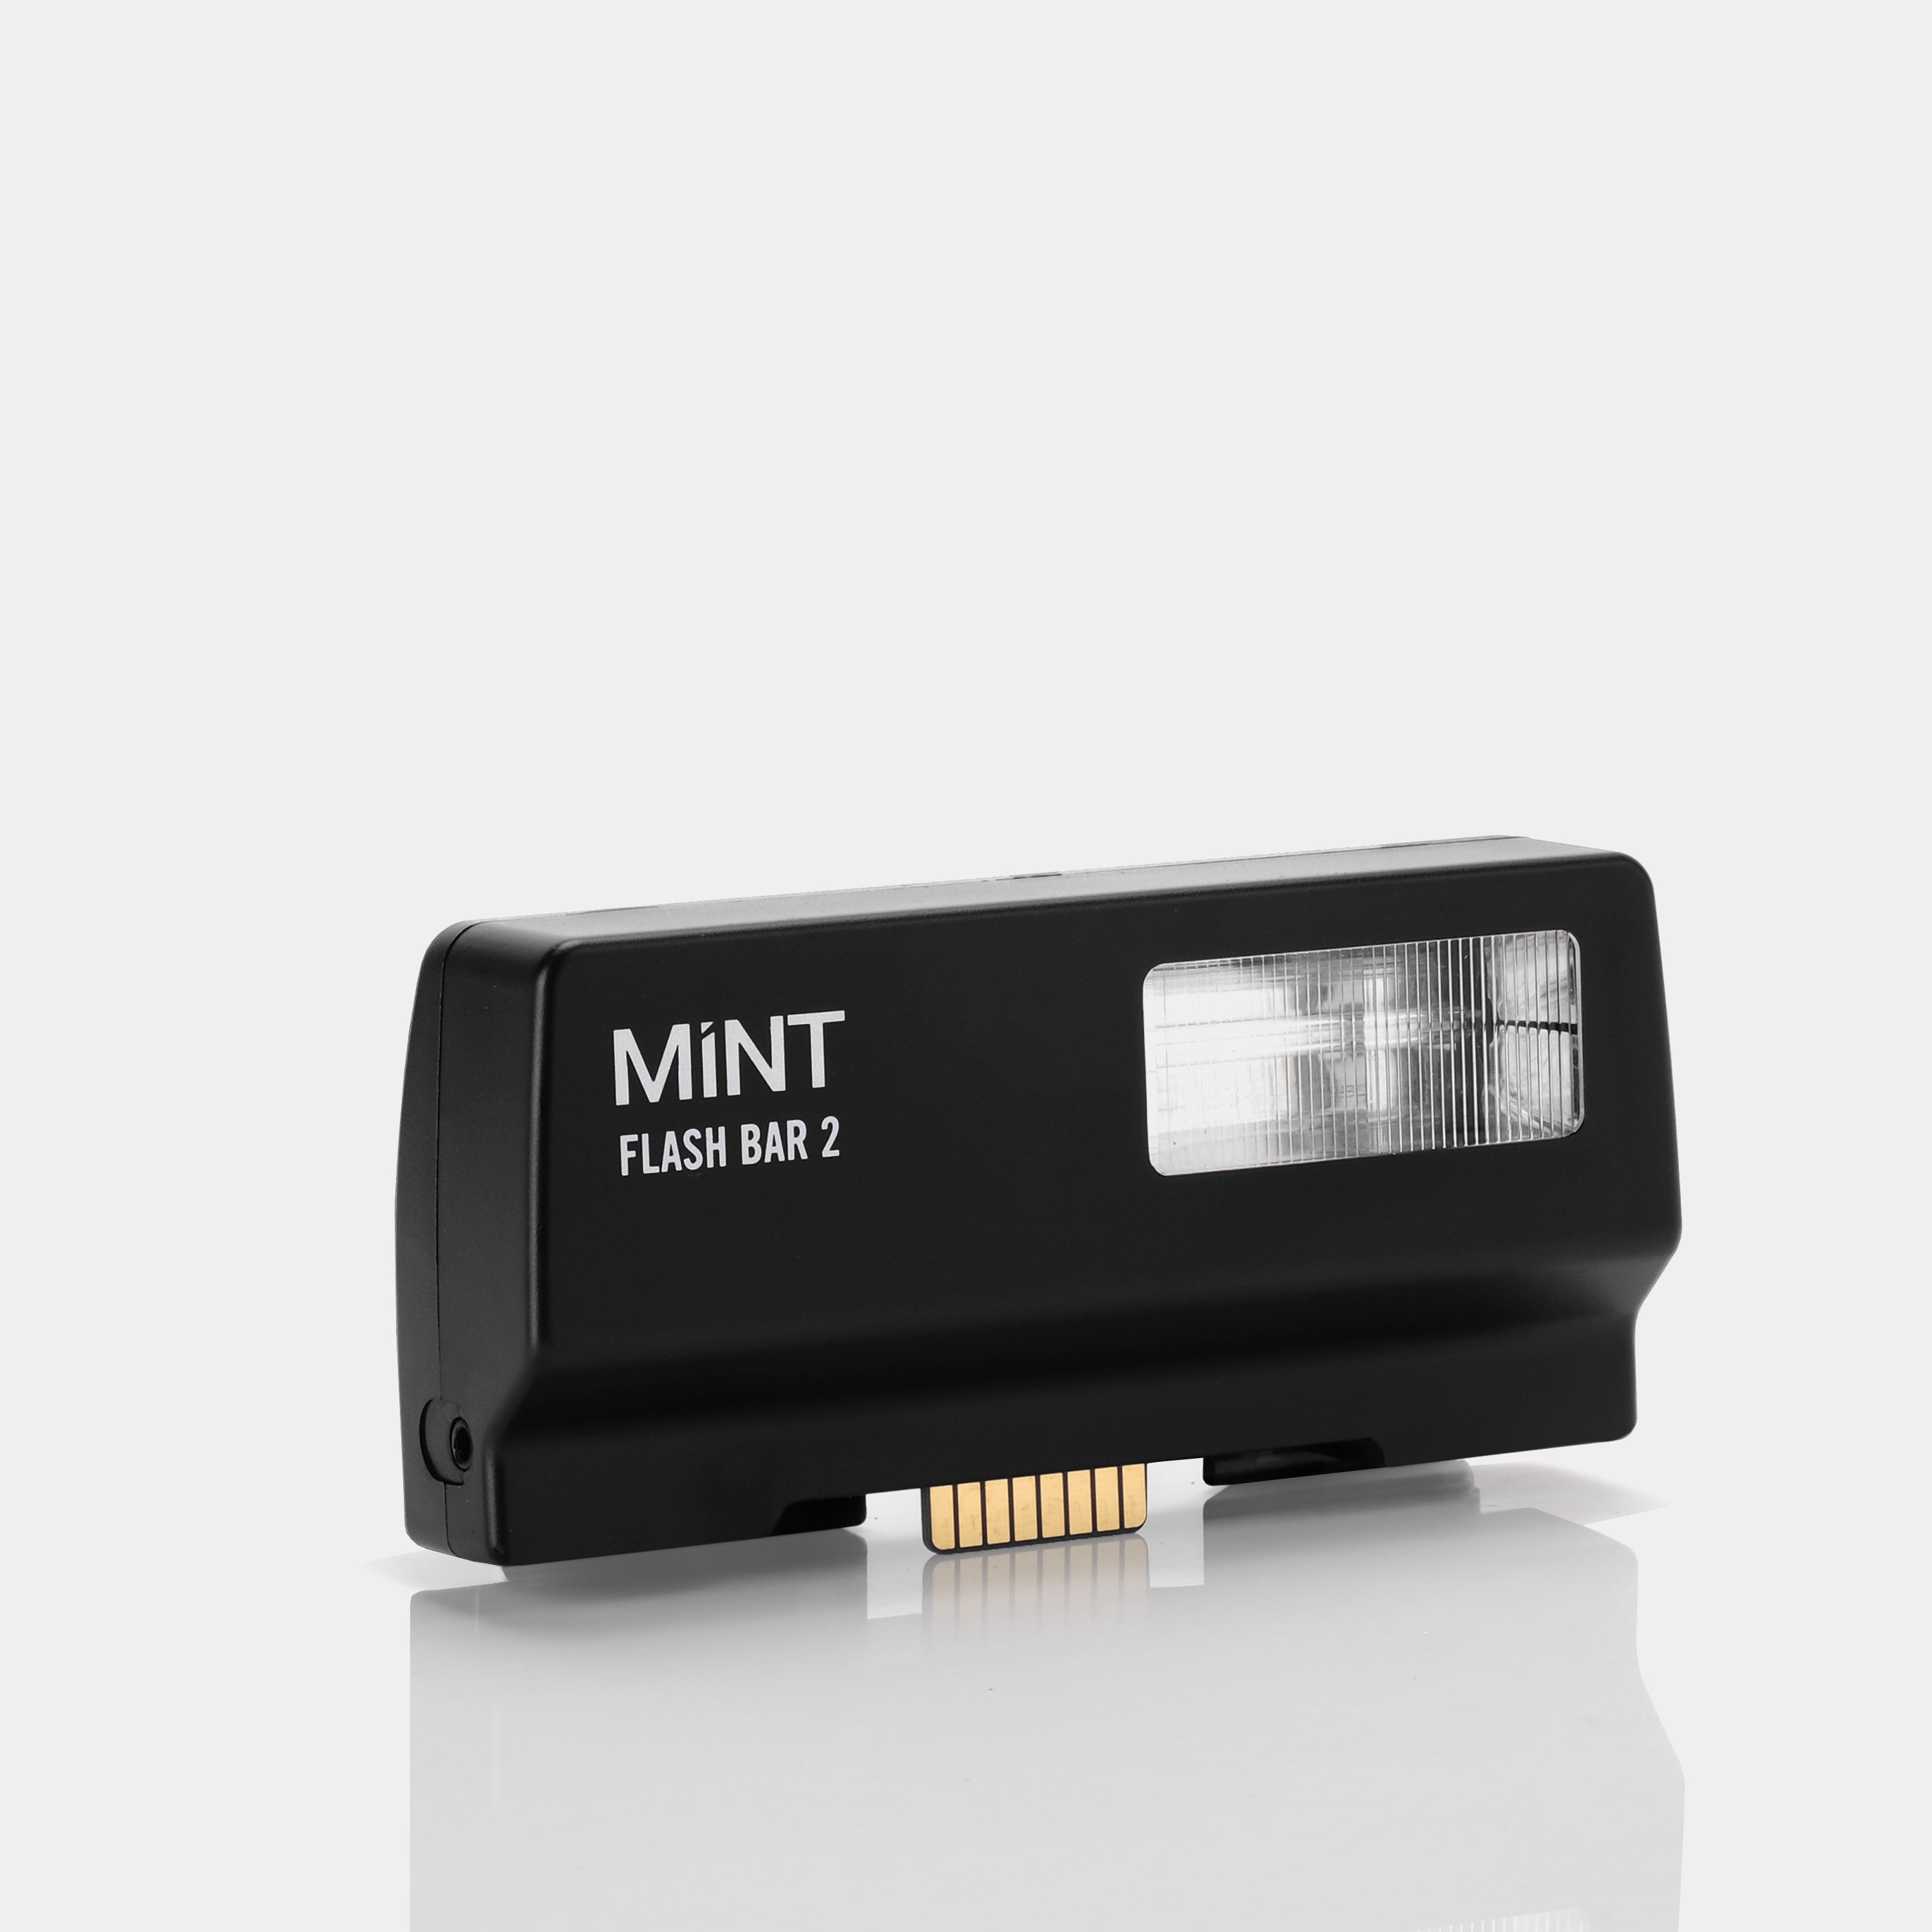 MiNT Flash Bar 2 SX-70 Flash Attachment